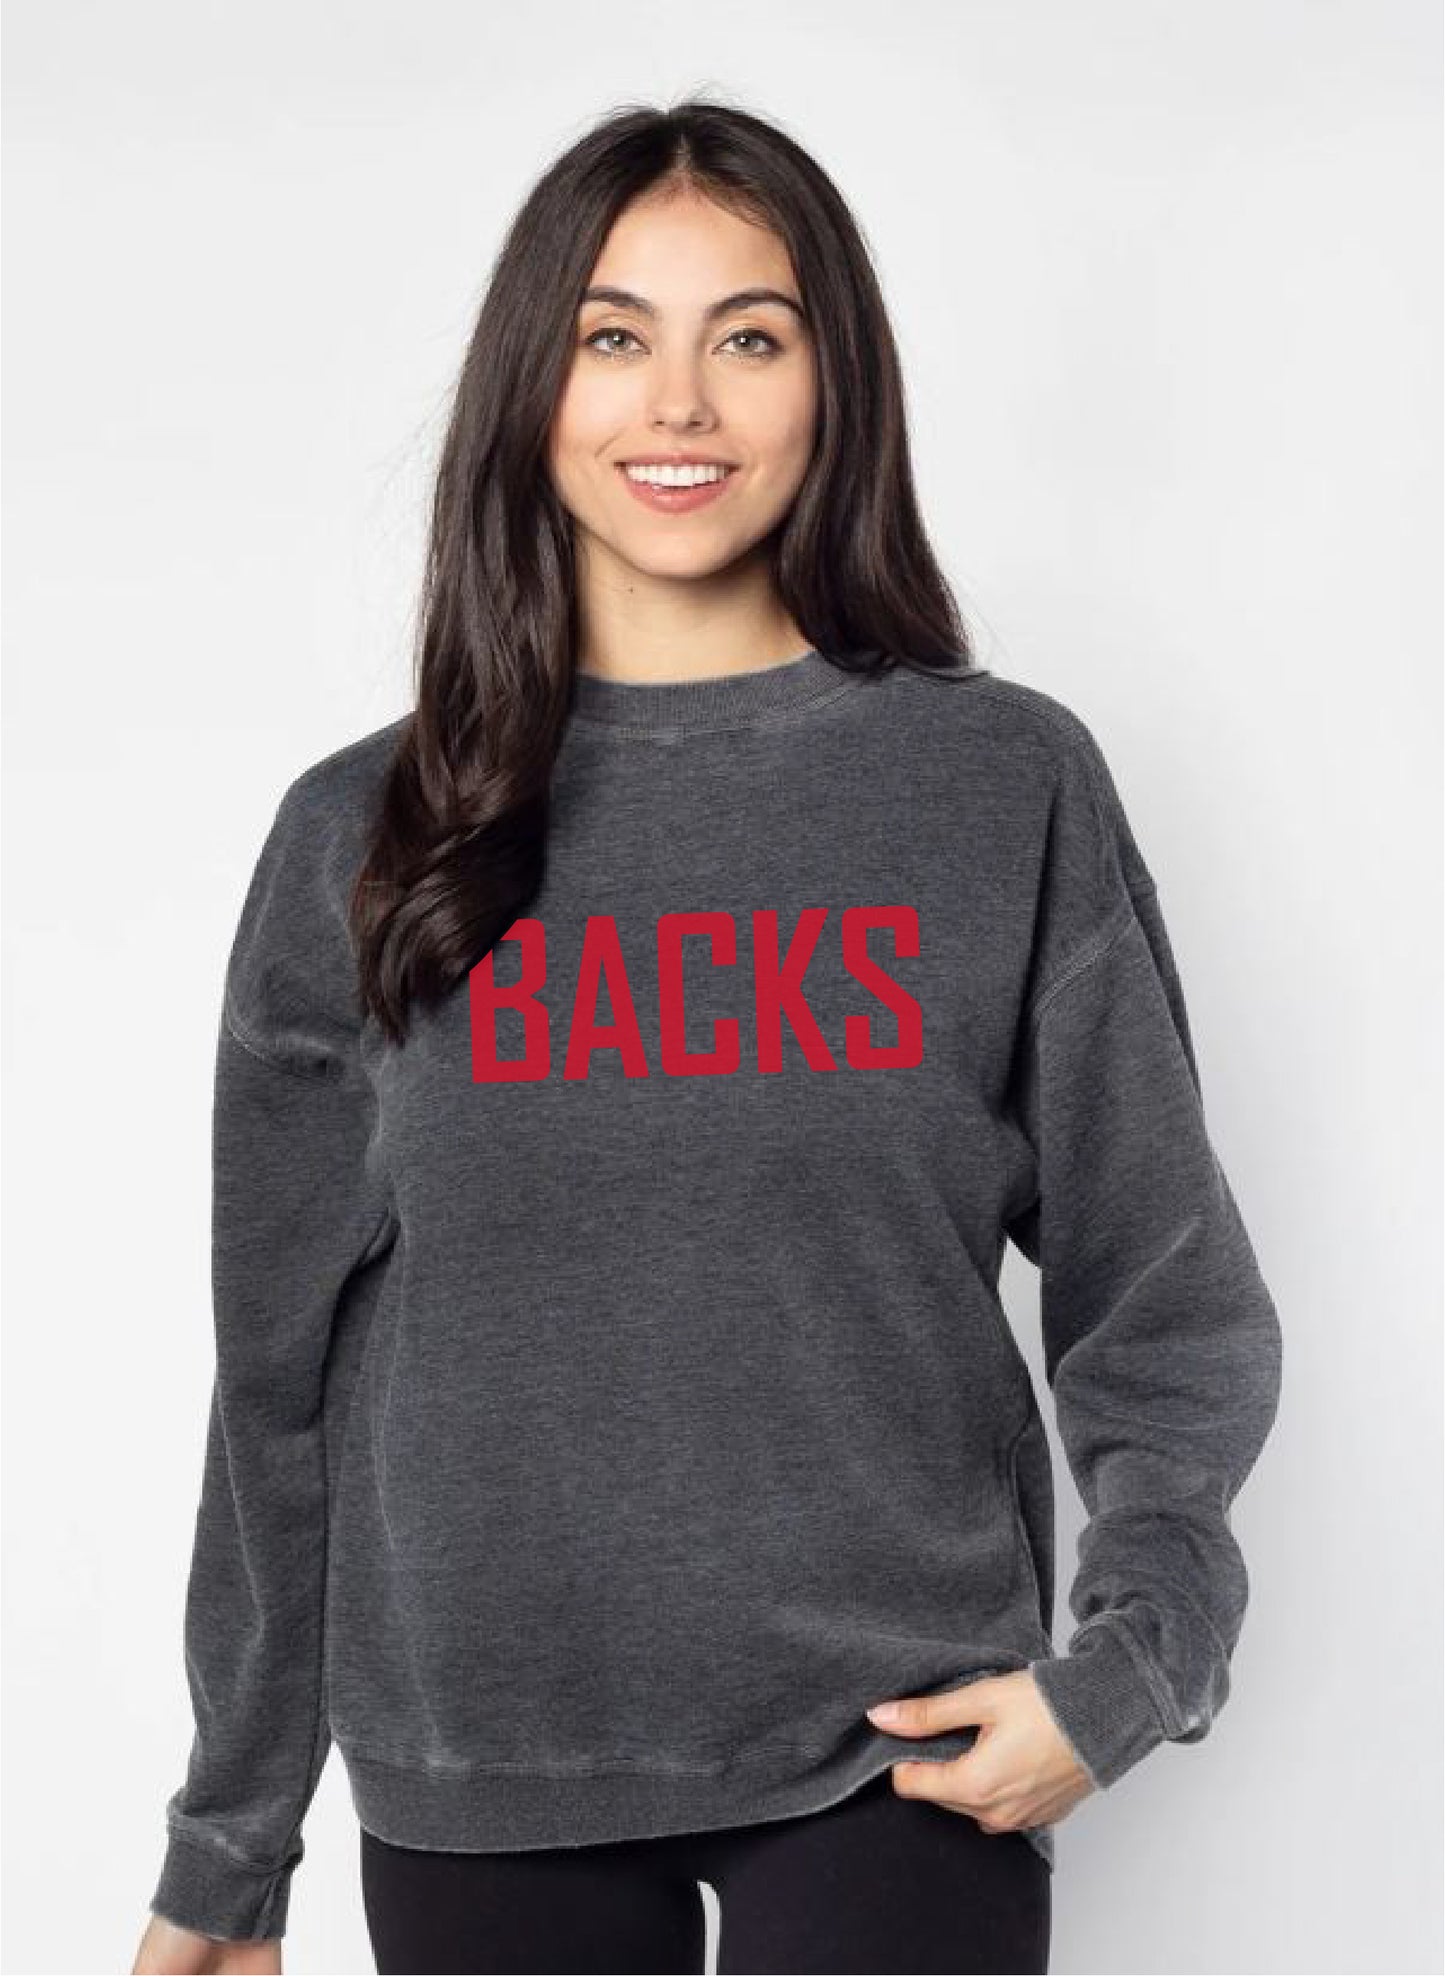 'BACKS burnout sweatshirt